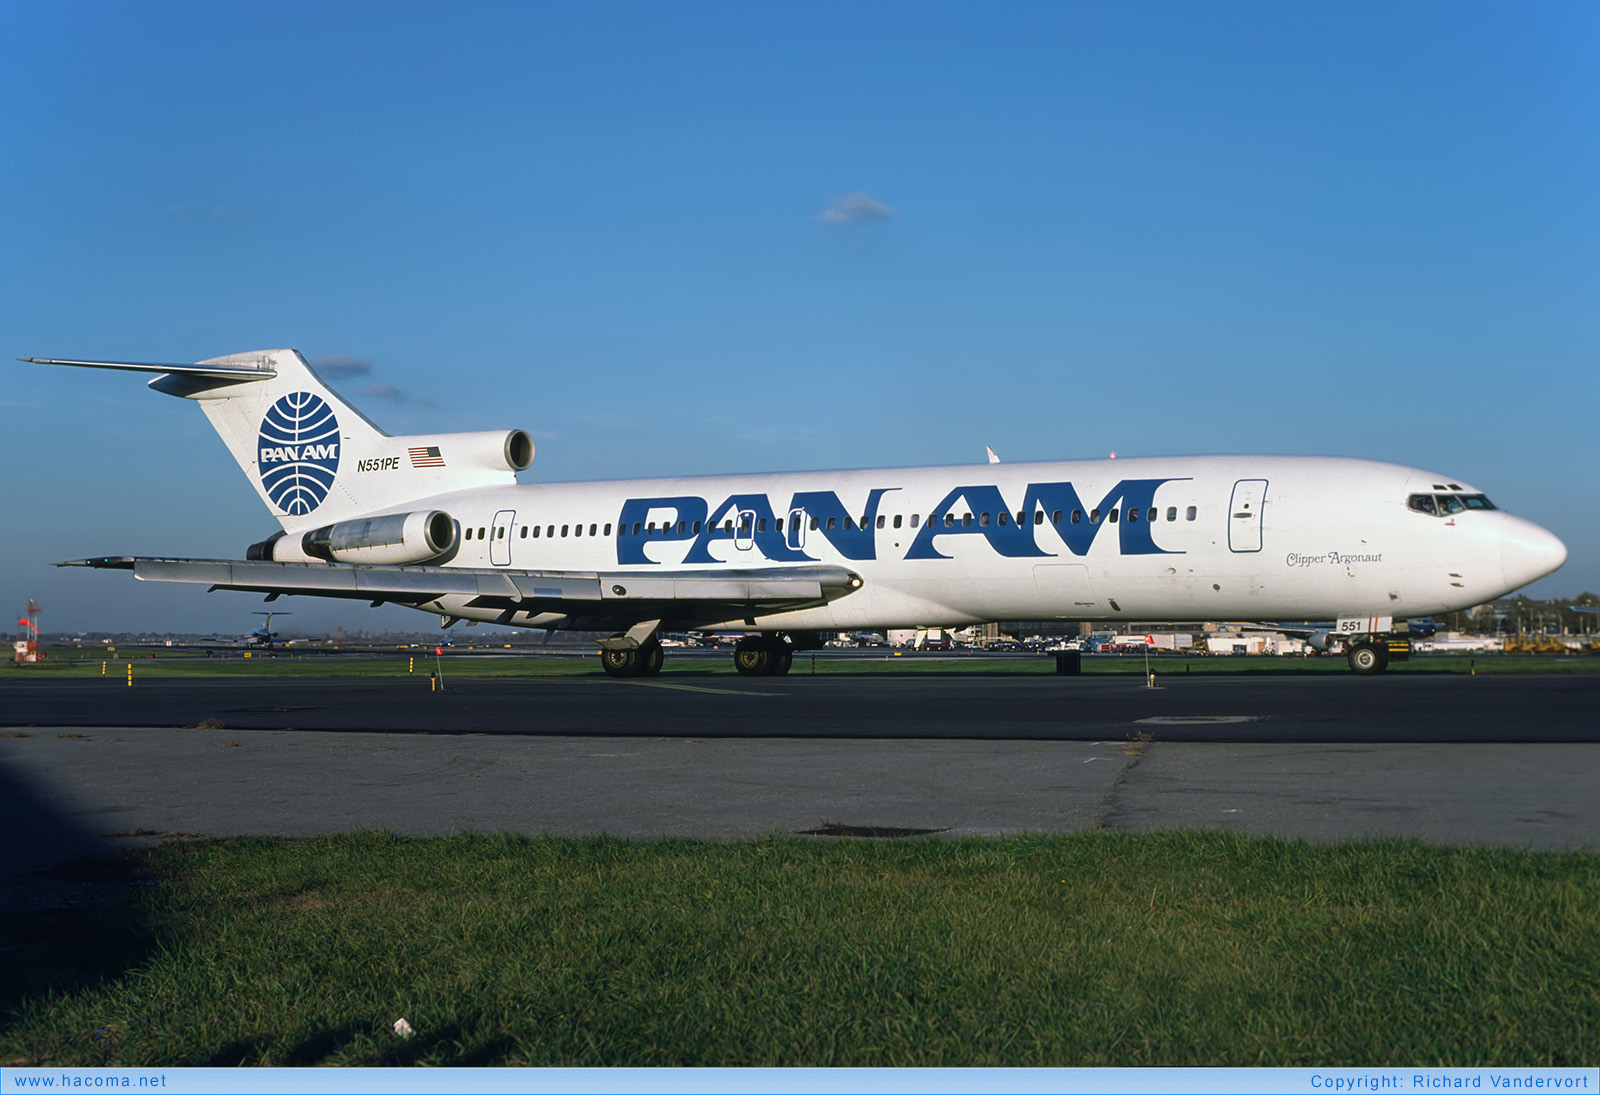 Photo of N551PE - Pan Am Clipper Argonaut - LaGuardia Airport - Nov 1988